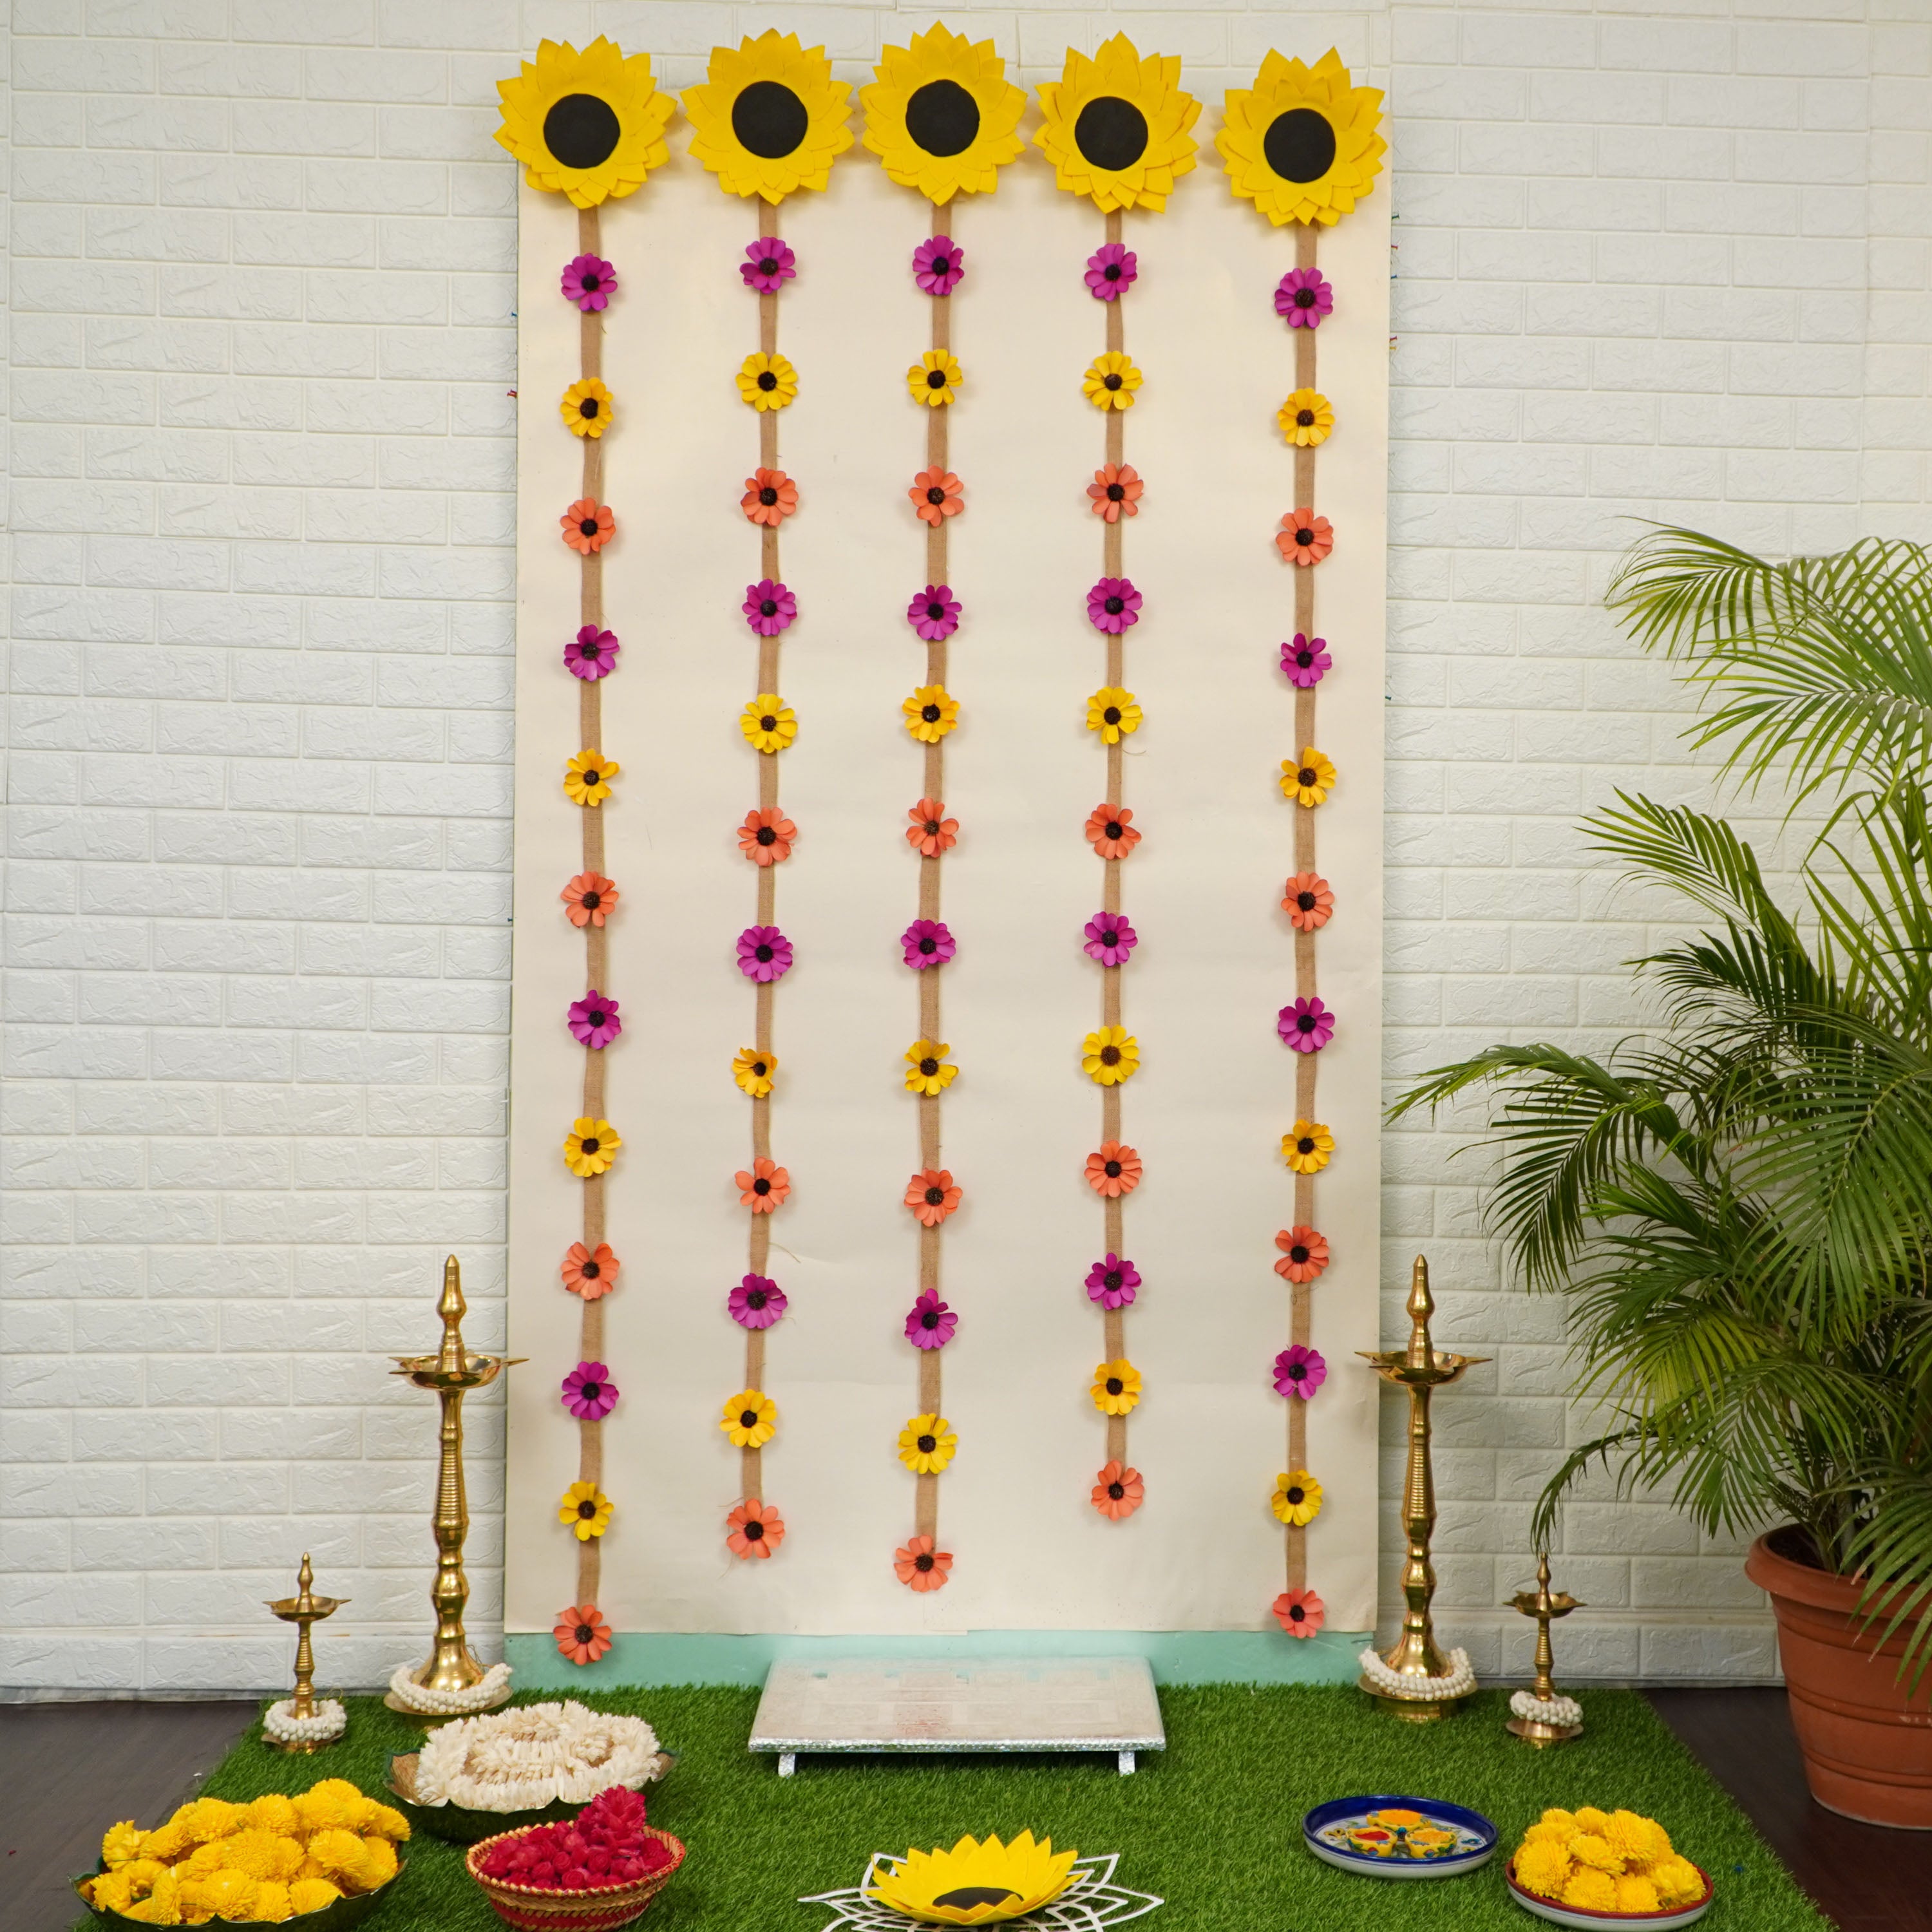 Foam Sunflower Backdrop Decor Kit online in the USA